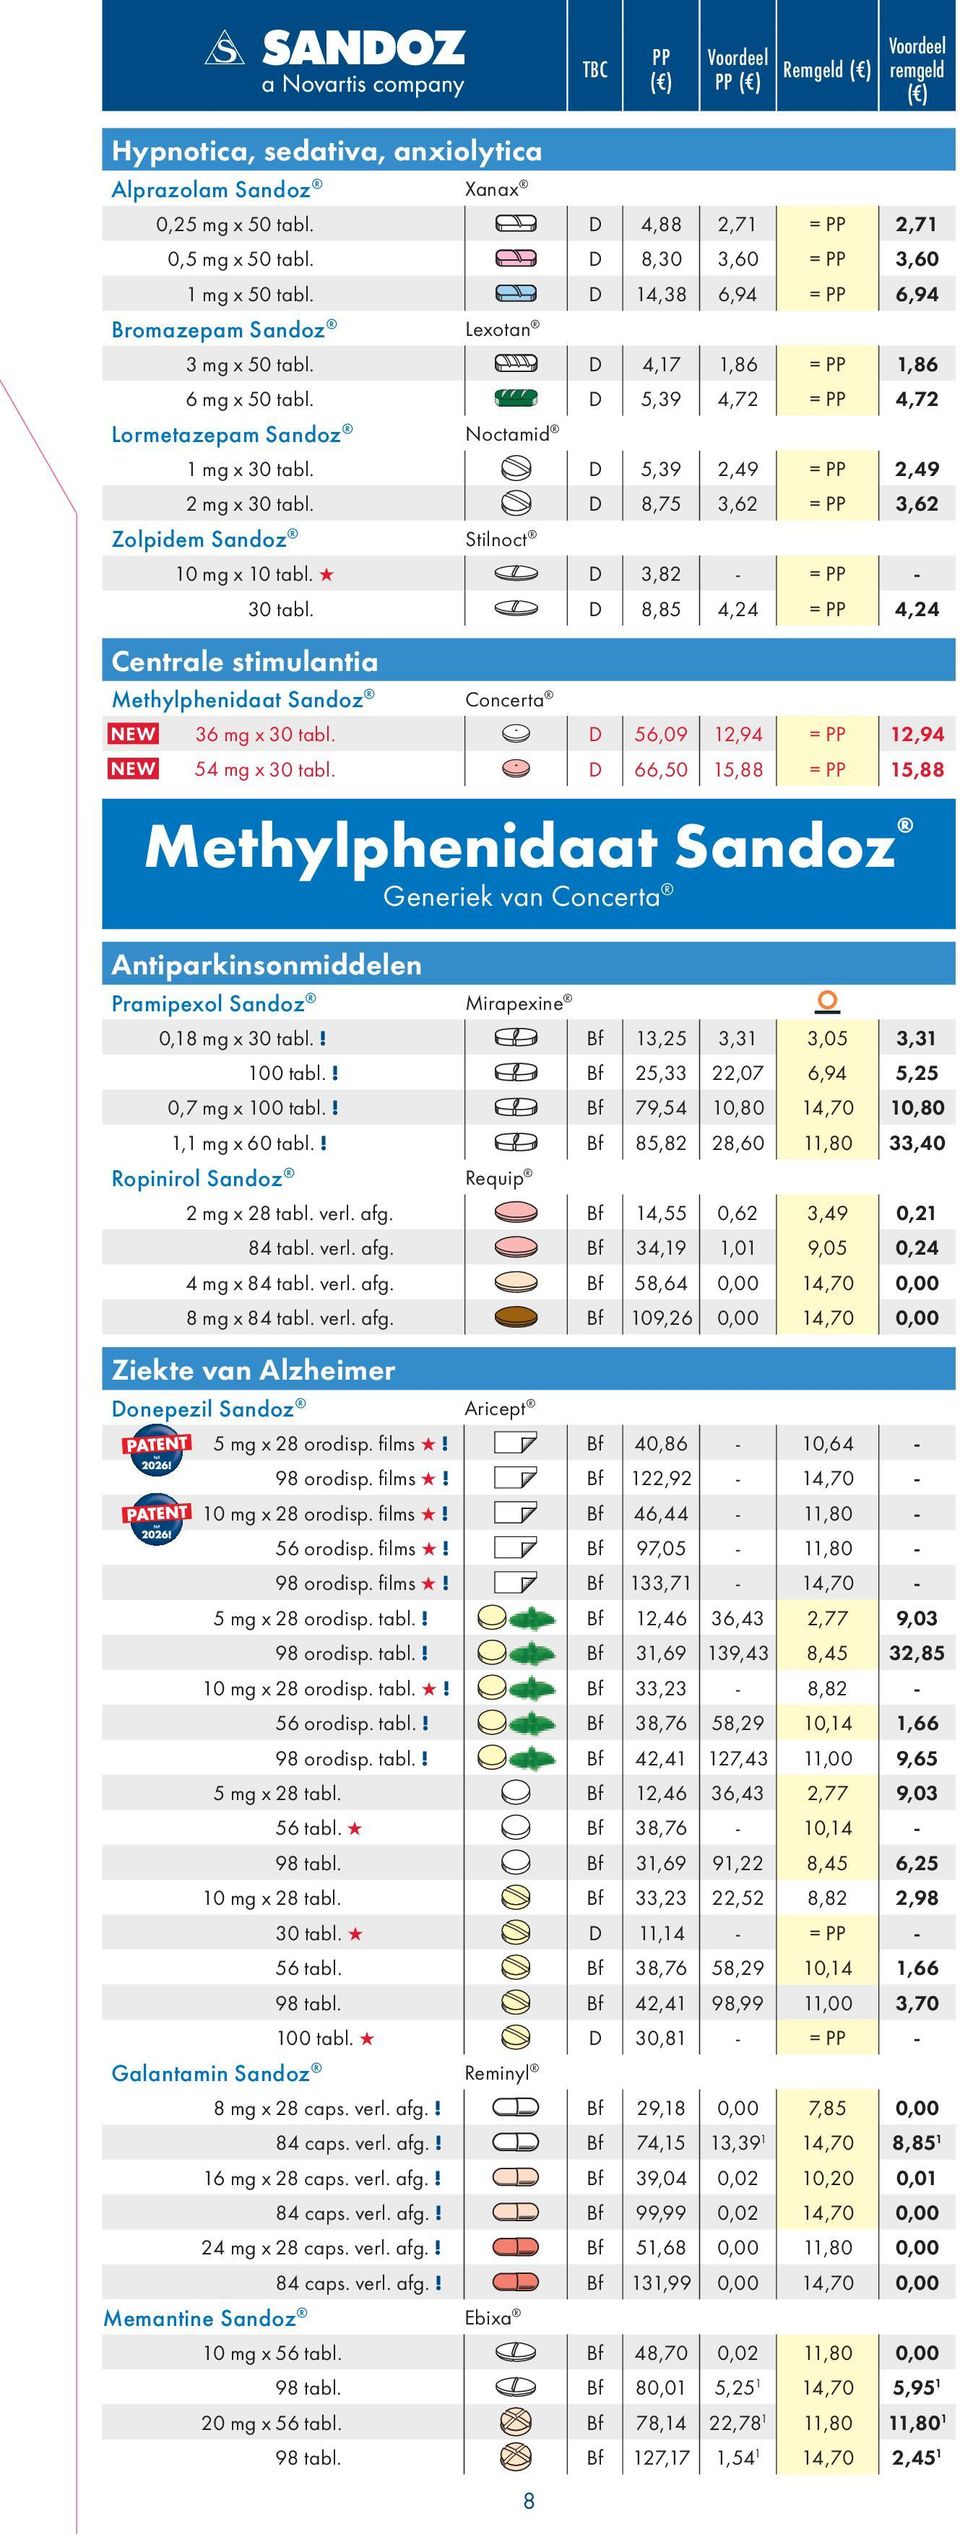 D 8,75 3,62 = 3,62 Zolpidem Sandoz Stilnoct 10 mg x 10 tabl. H D 3,82 = Centrale stimulantia Methylphenidaat Sandoz 30 tabl.